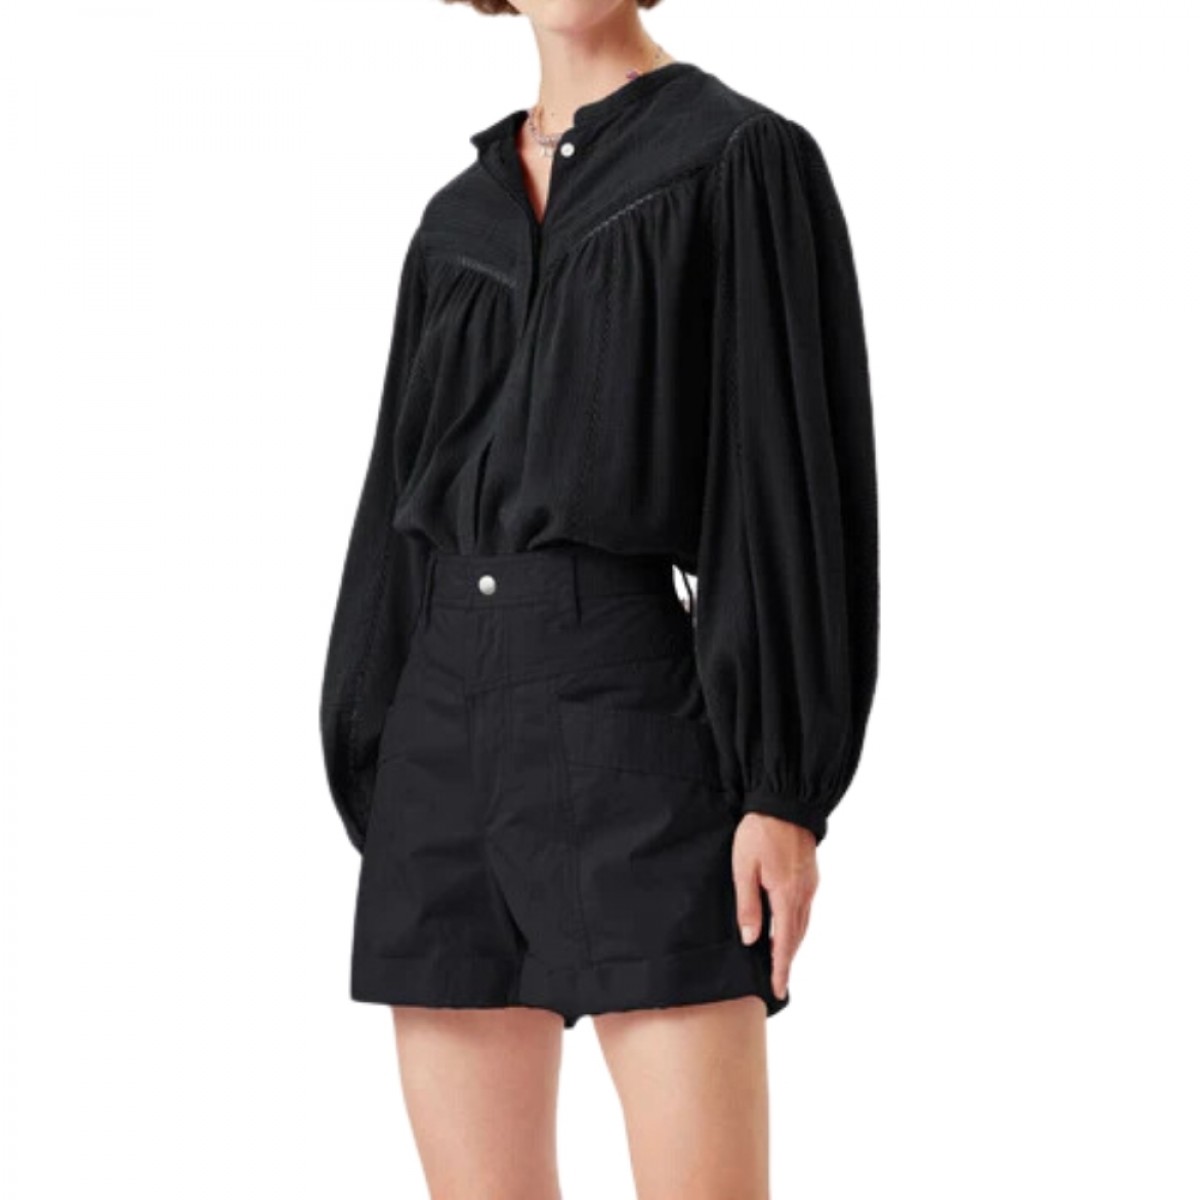 leonard cotton and linen top - black - model front